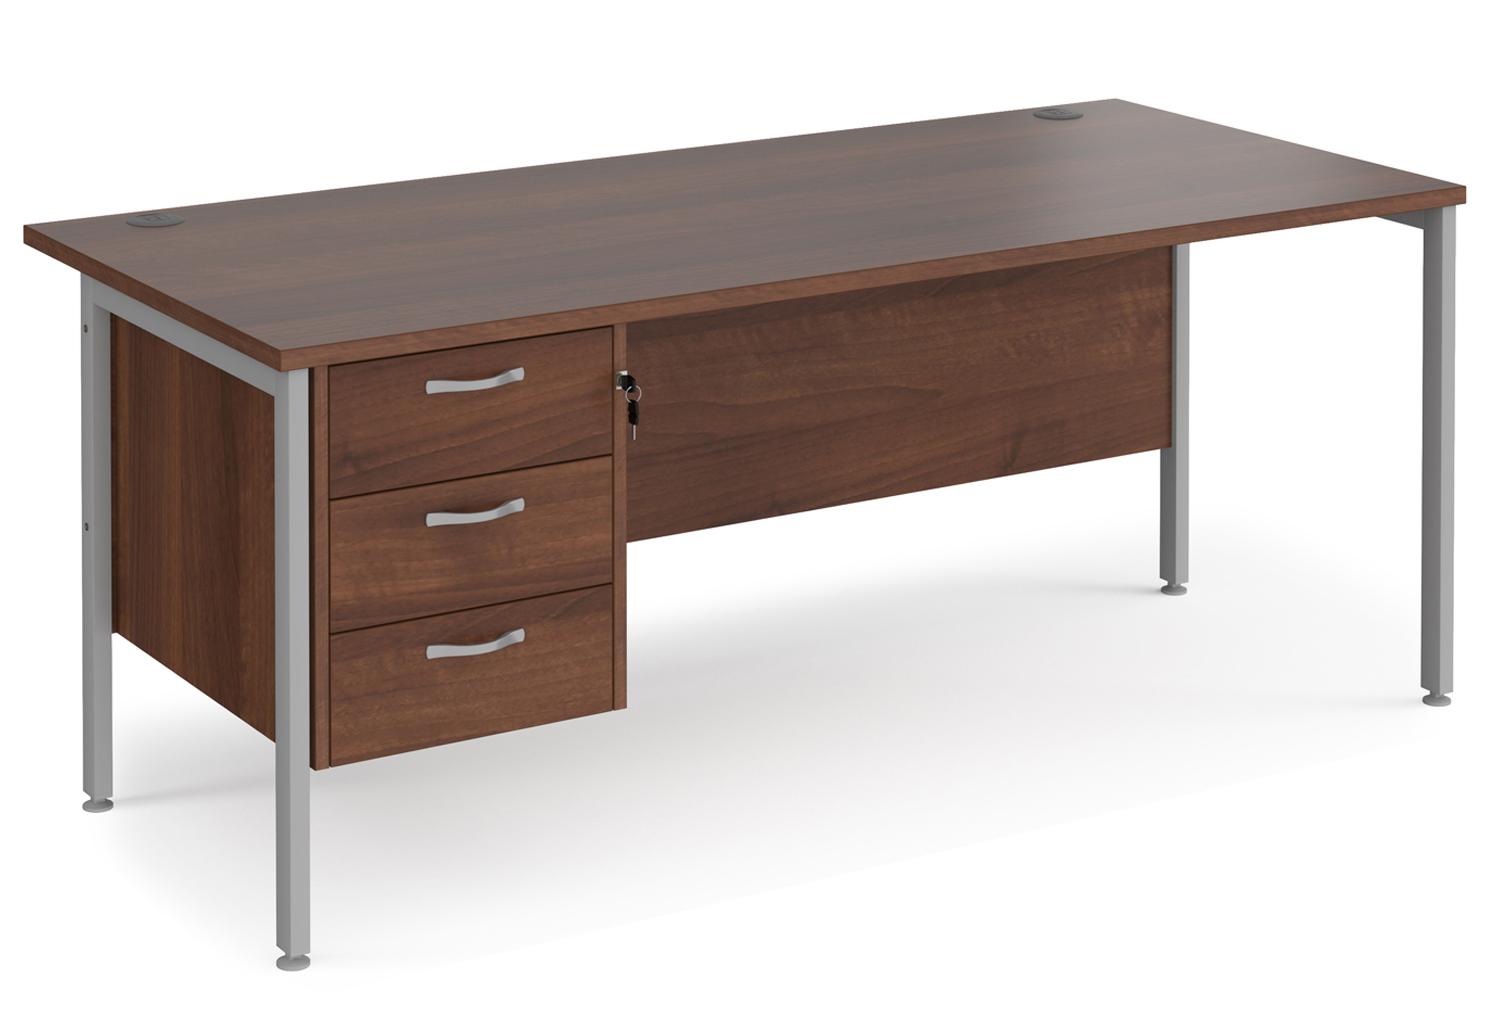 Value Line Deluxe H-Leg Rectangular Office Desk 3 Drawers (Silver Legs), 180wx80dx73h (cm), Walnut